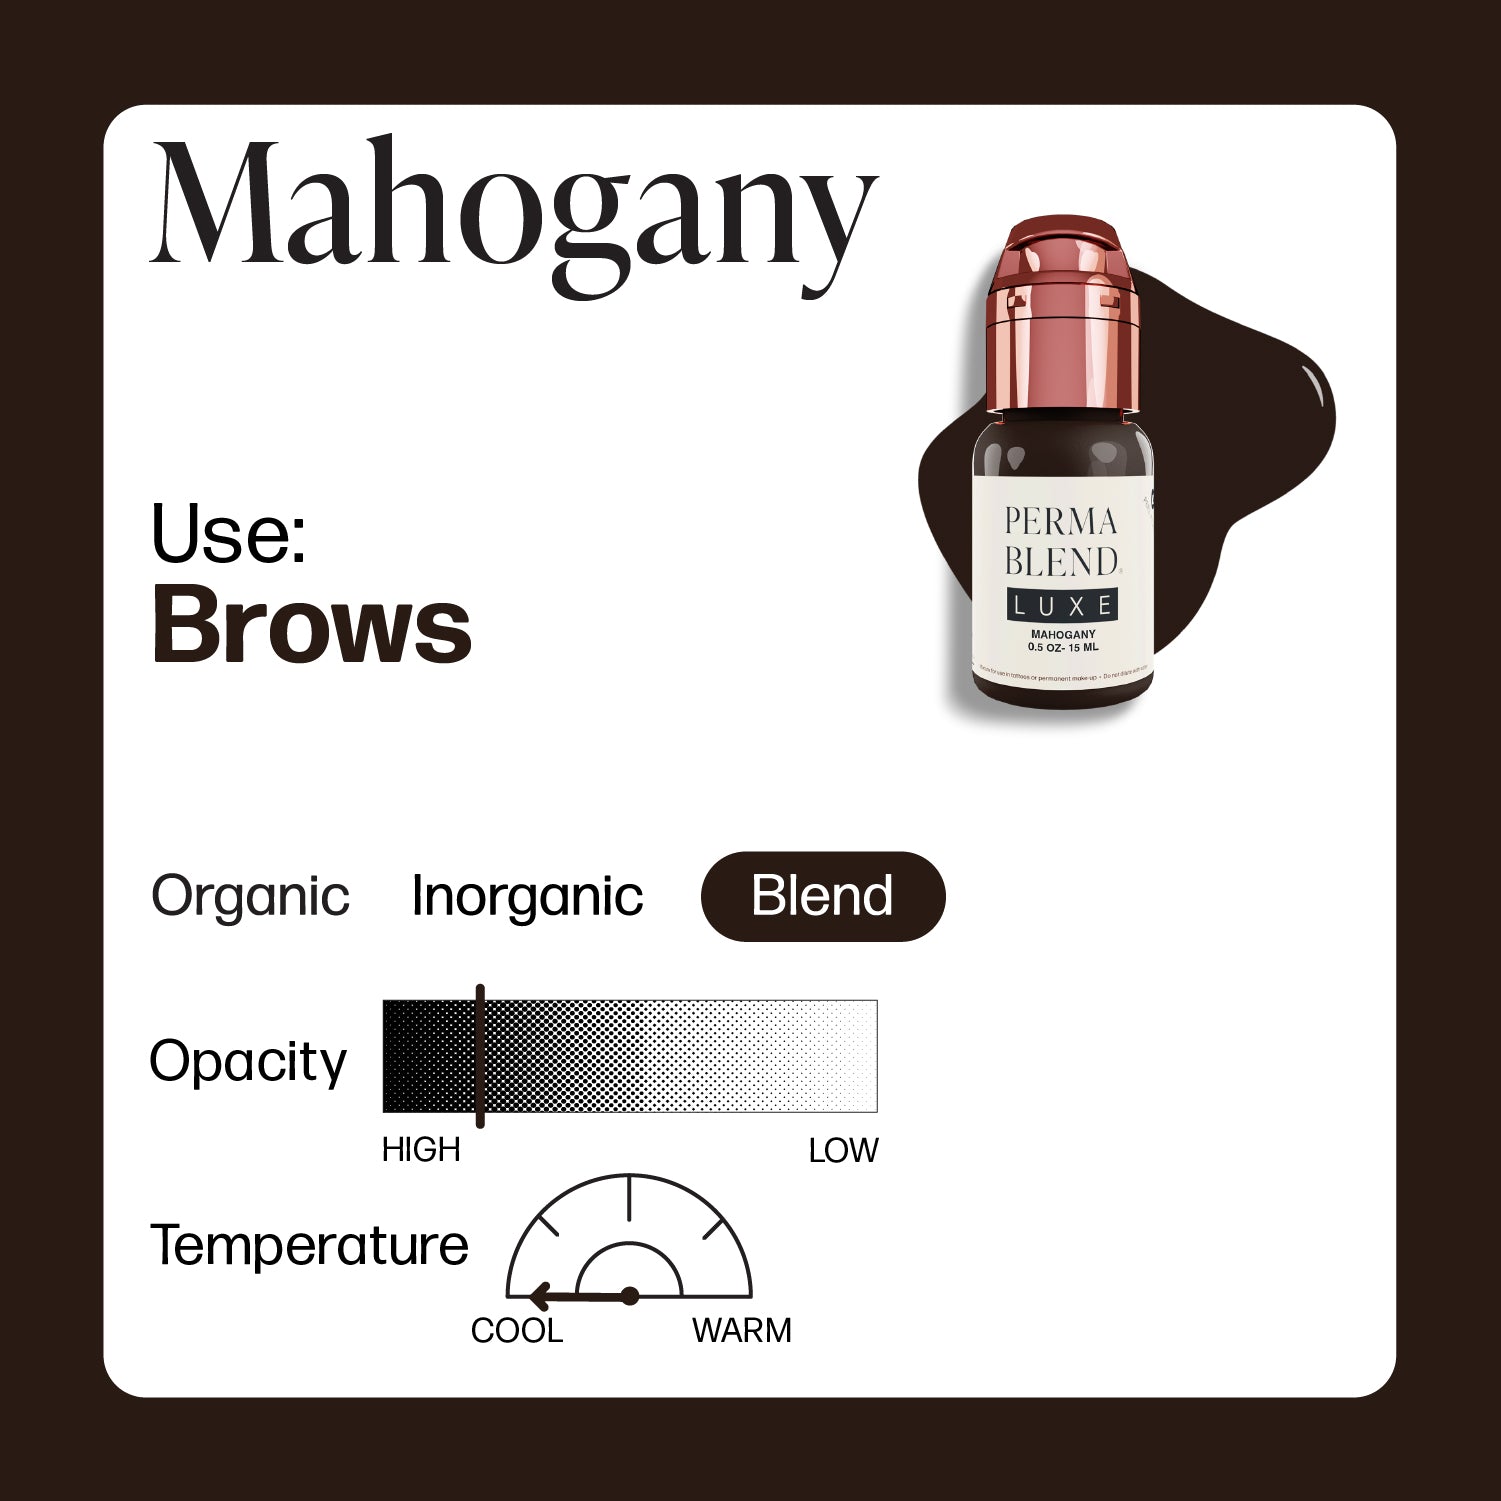 Mahogany - Perma Blend Luxe